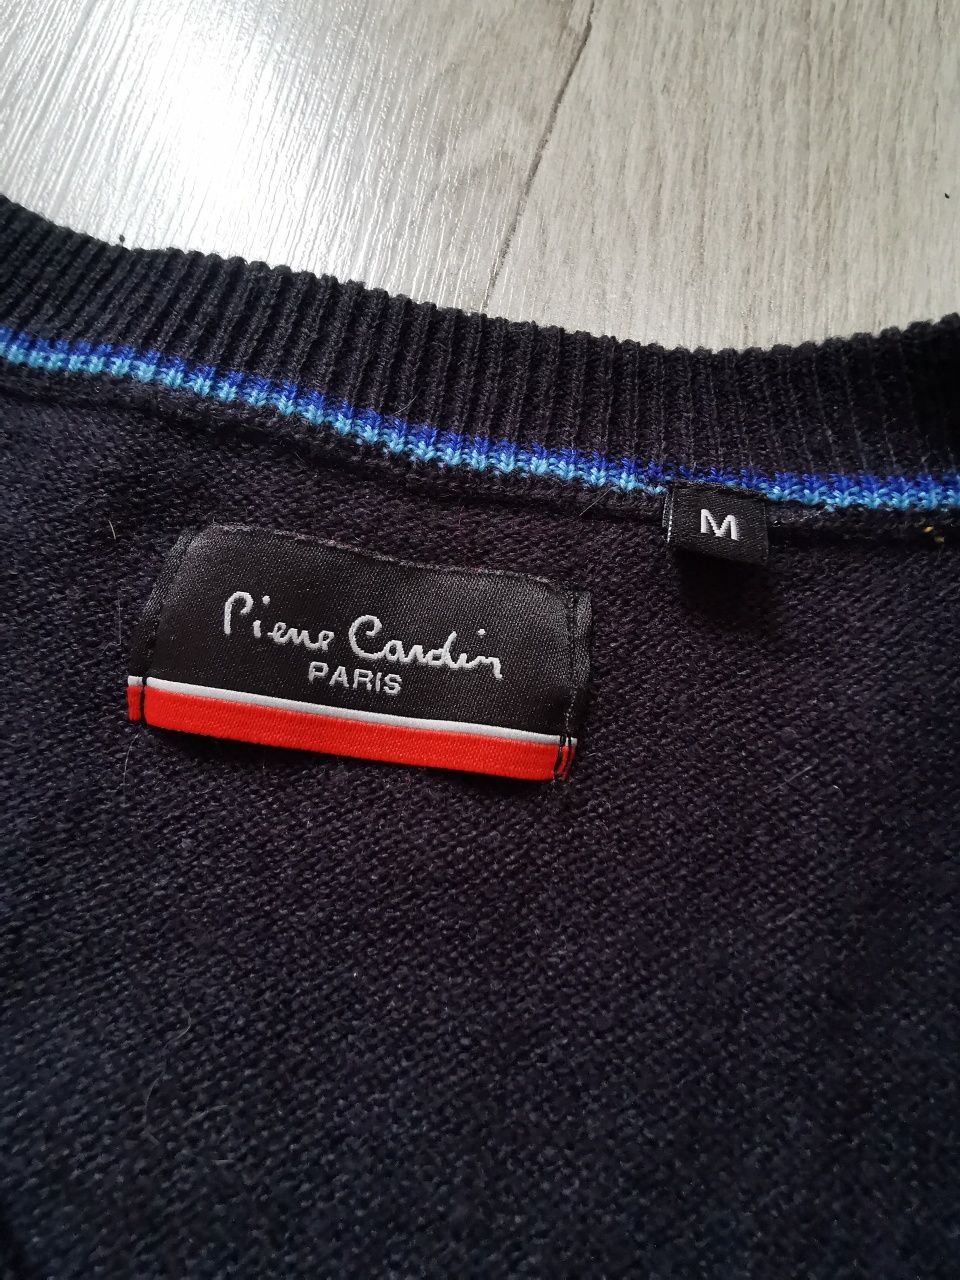 Pierre Cardin granatowy sweter M dekolt V